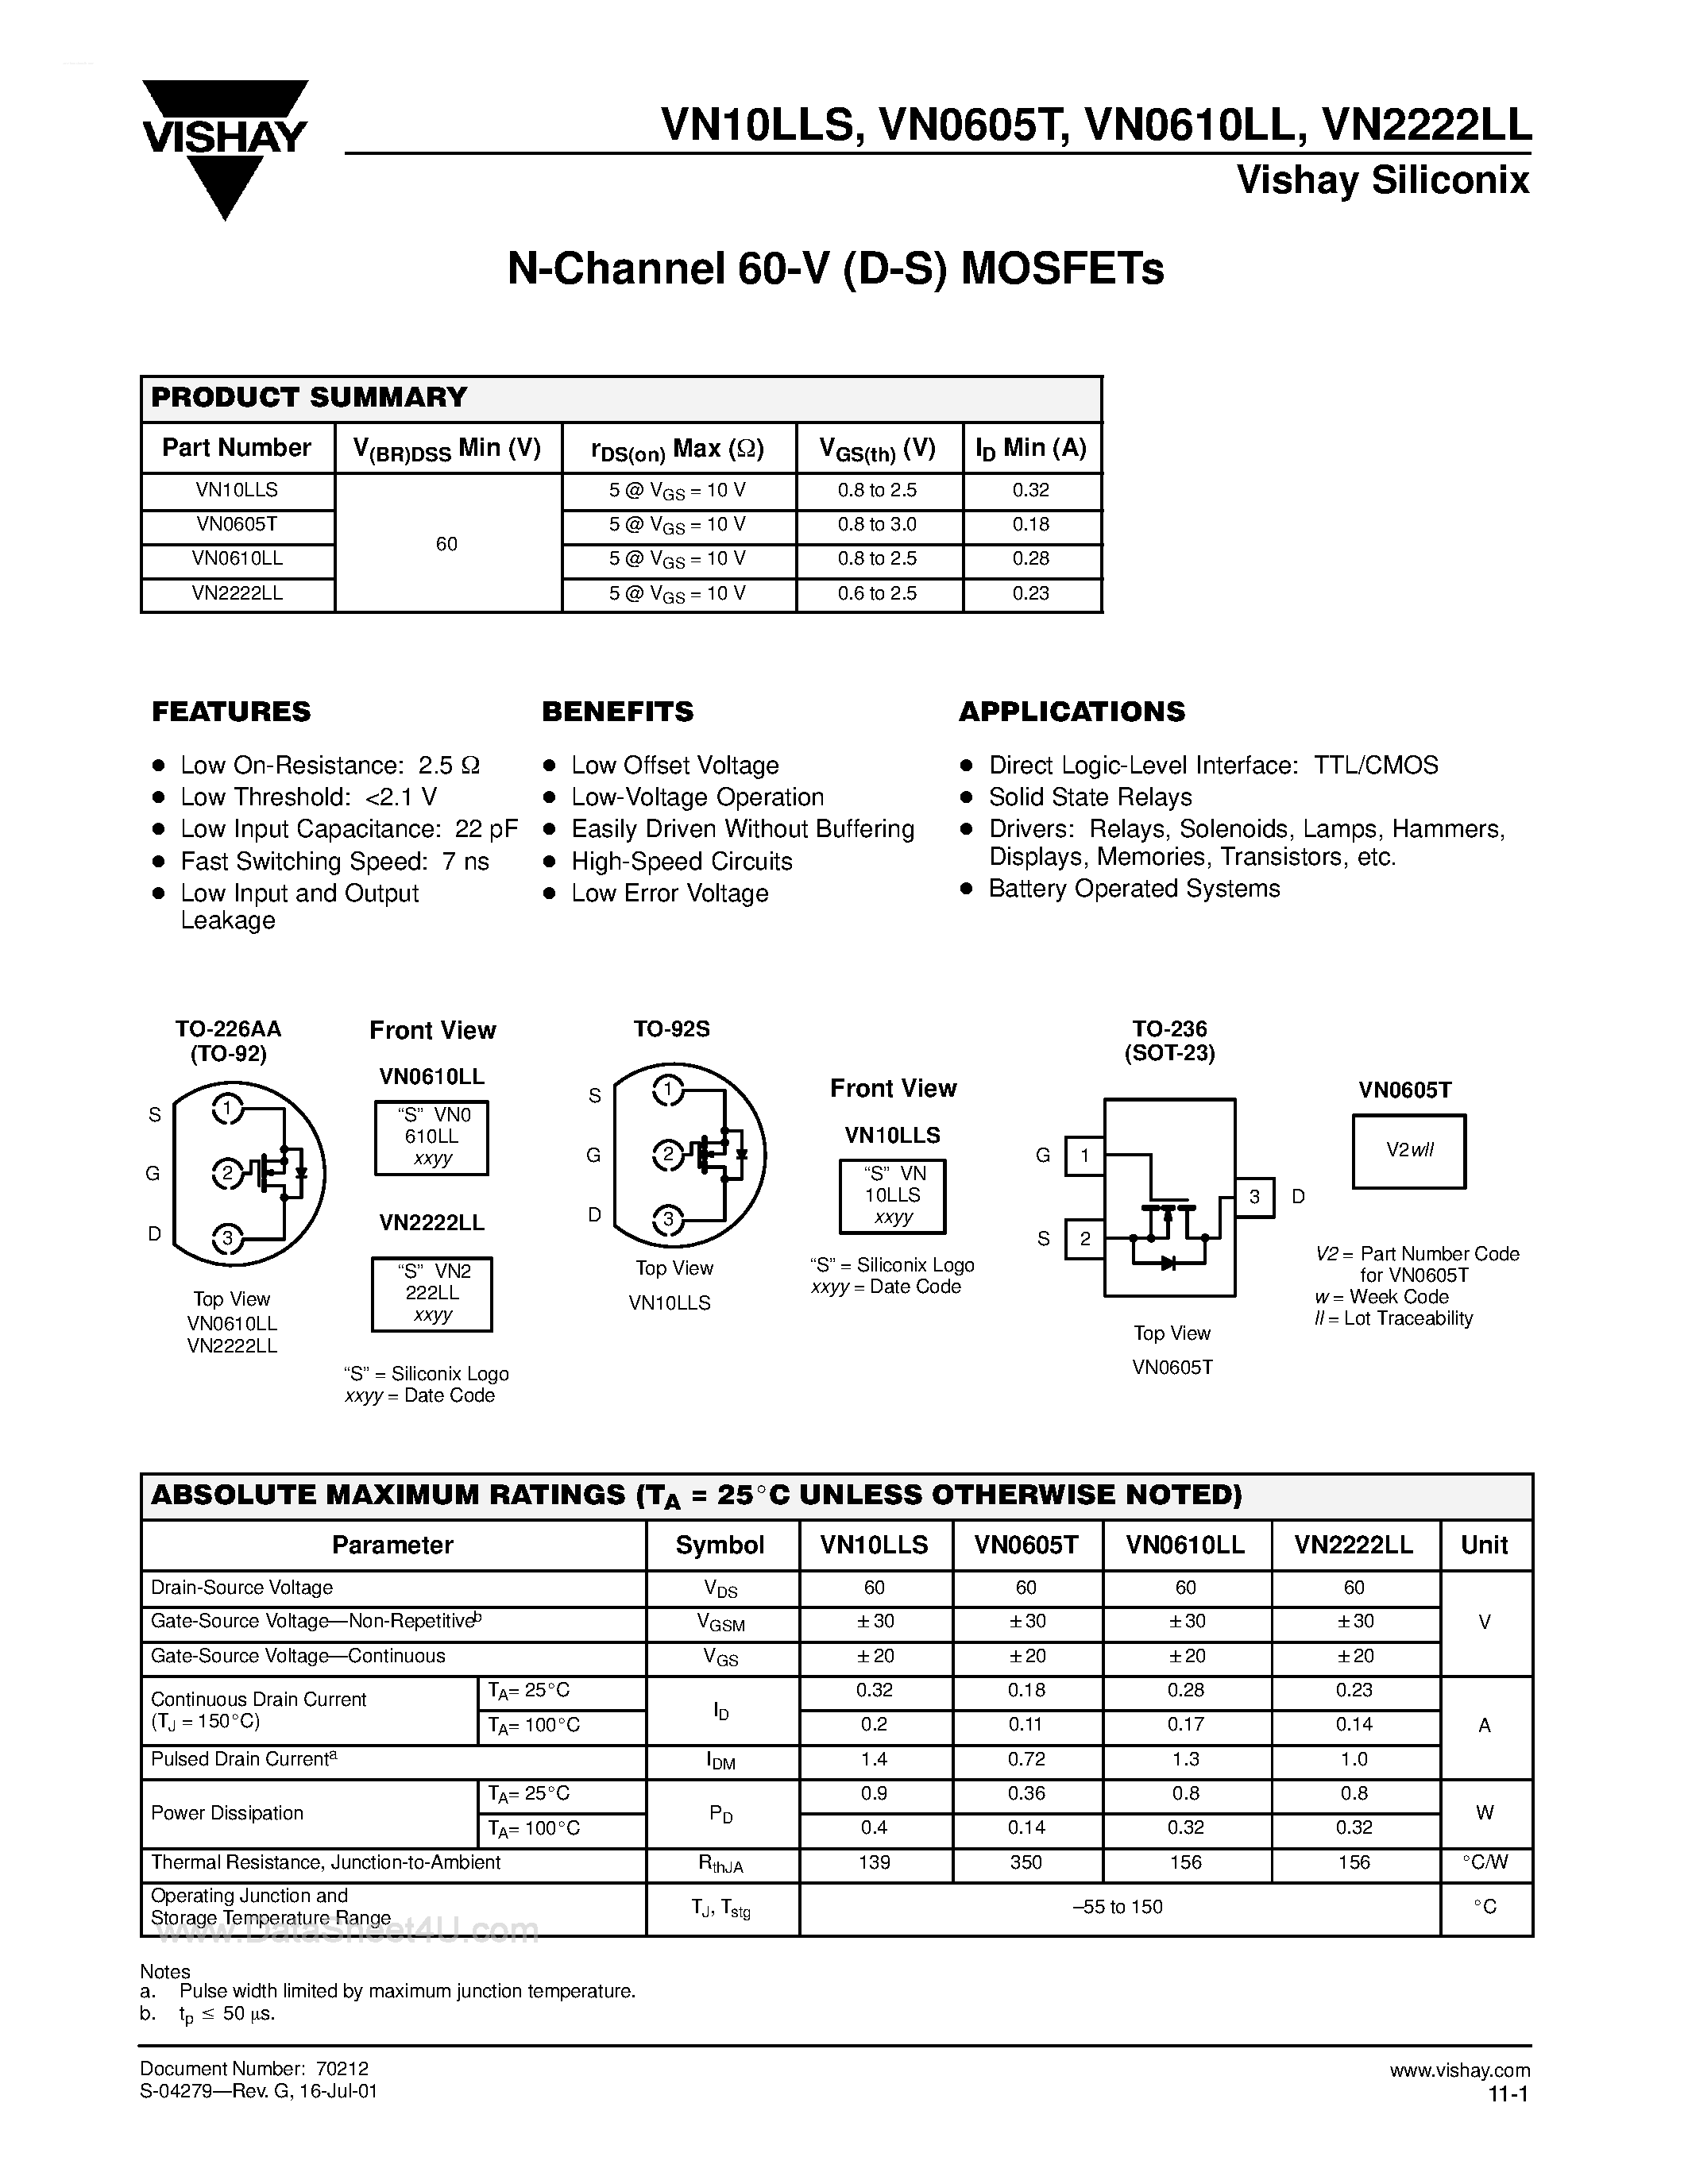 Даташит VN2222LL - N-Channel 60-V (D-S) MOSFETs страница 1